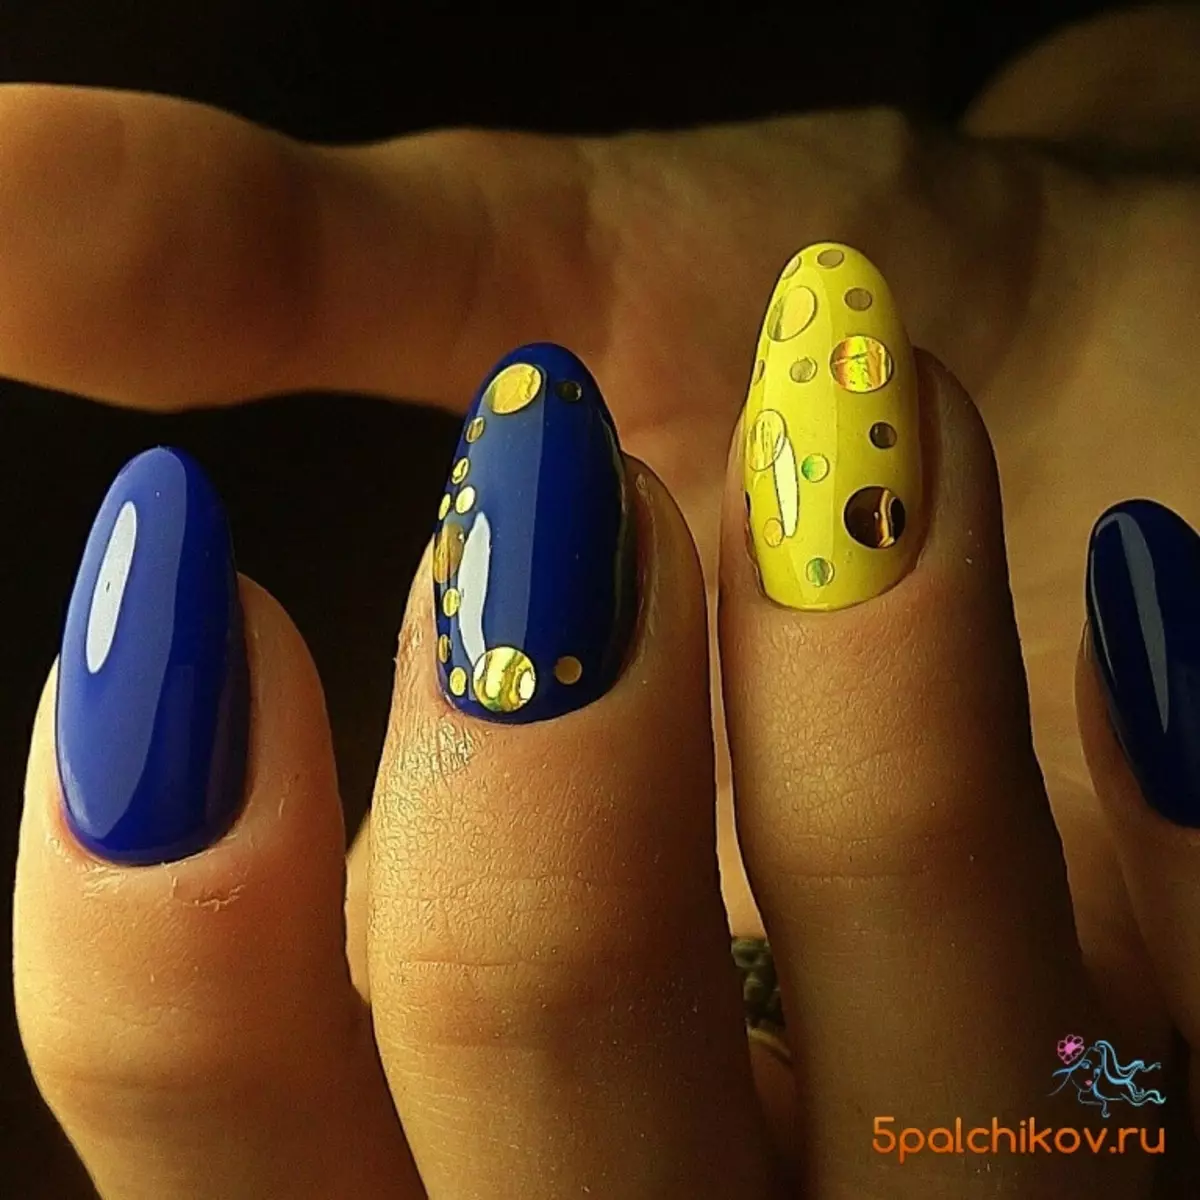 Manicura azul-amarela (51 fotos): ideas de deseño de uñas en tons amarelos e azuis 24468_45